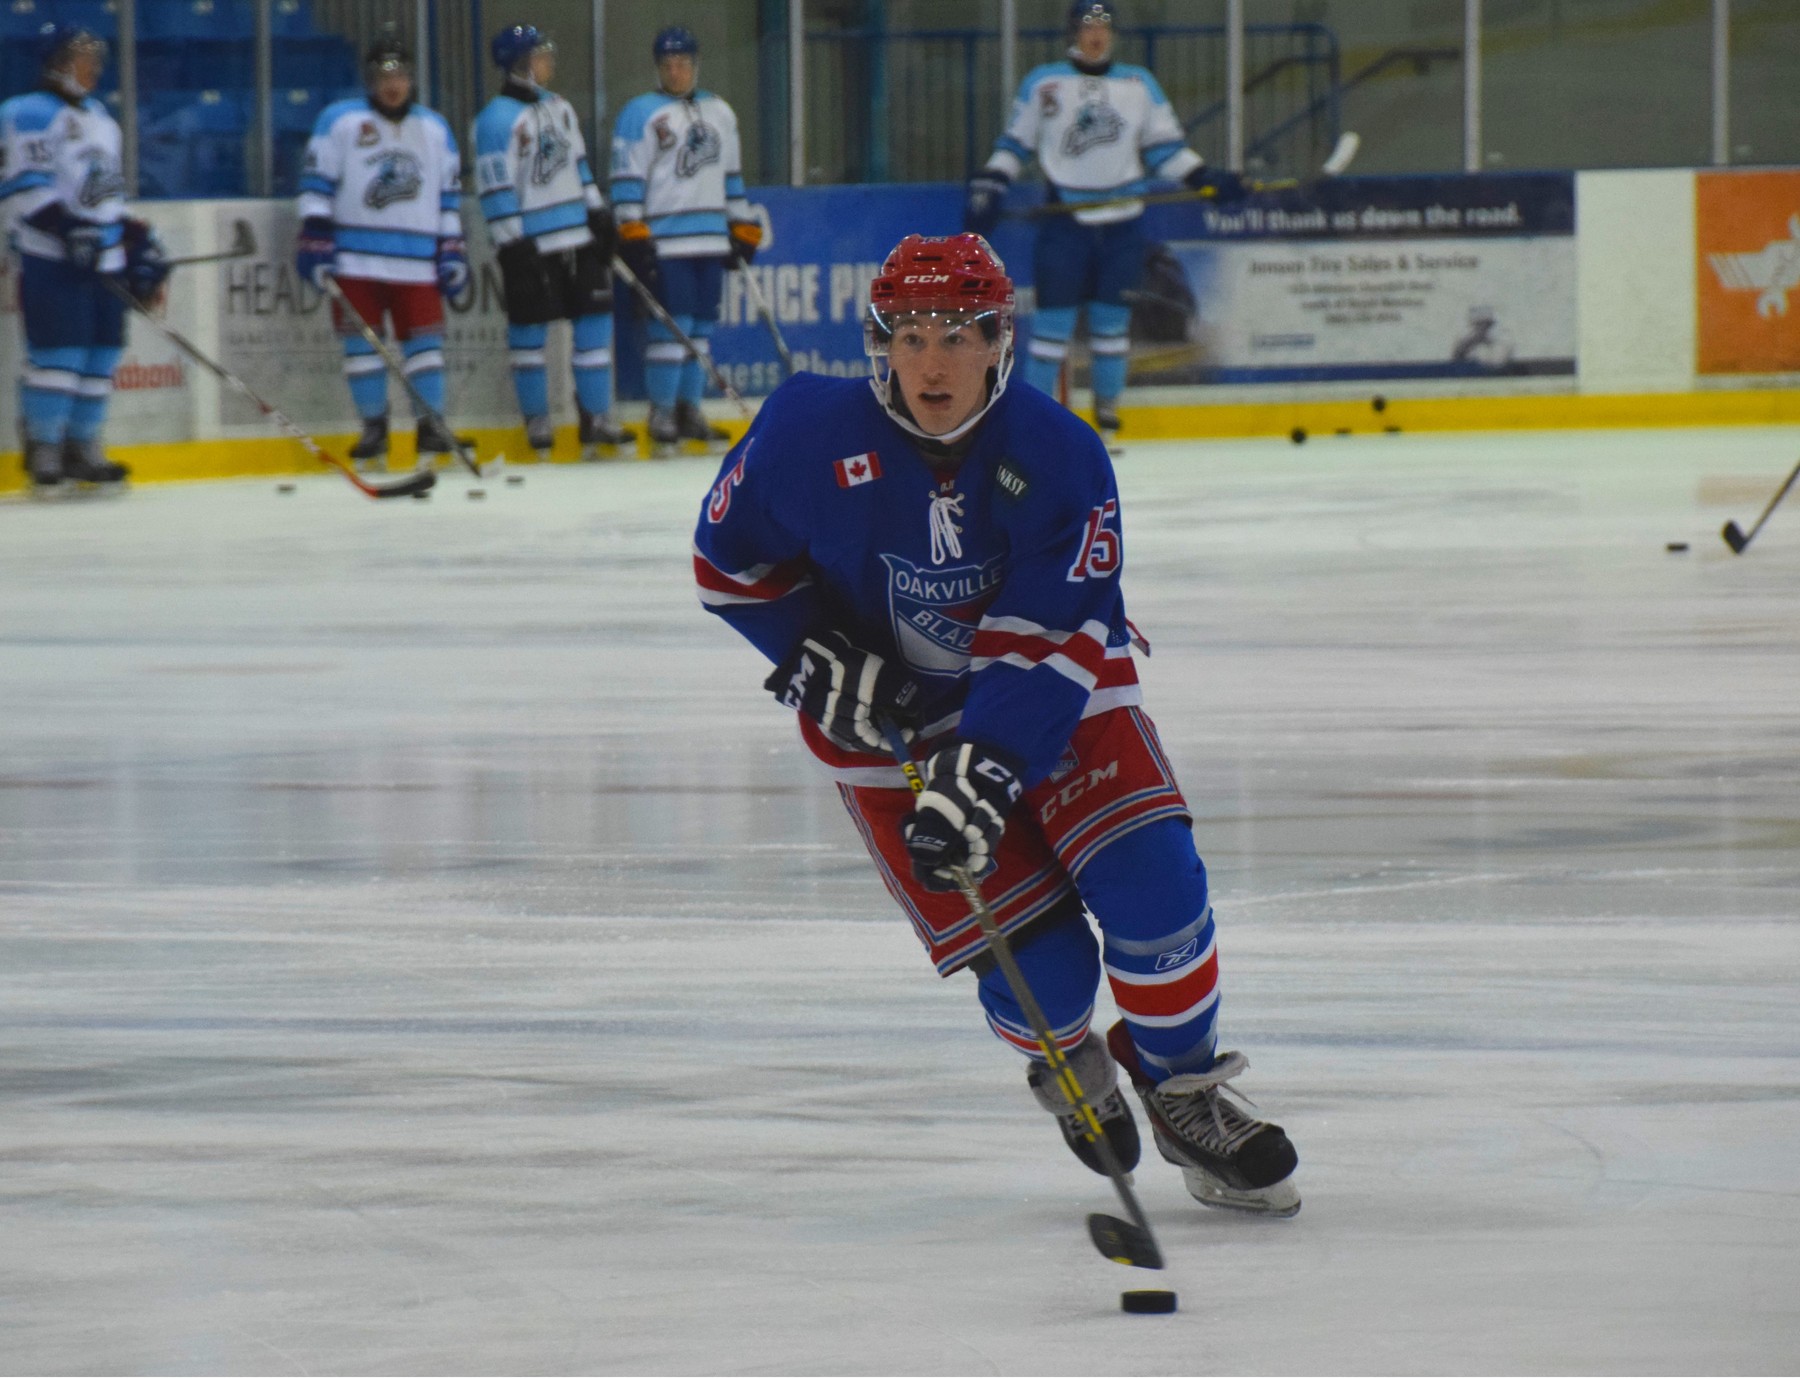 Hockey player on ice | Scott Ellis - The Hockey House